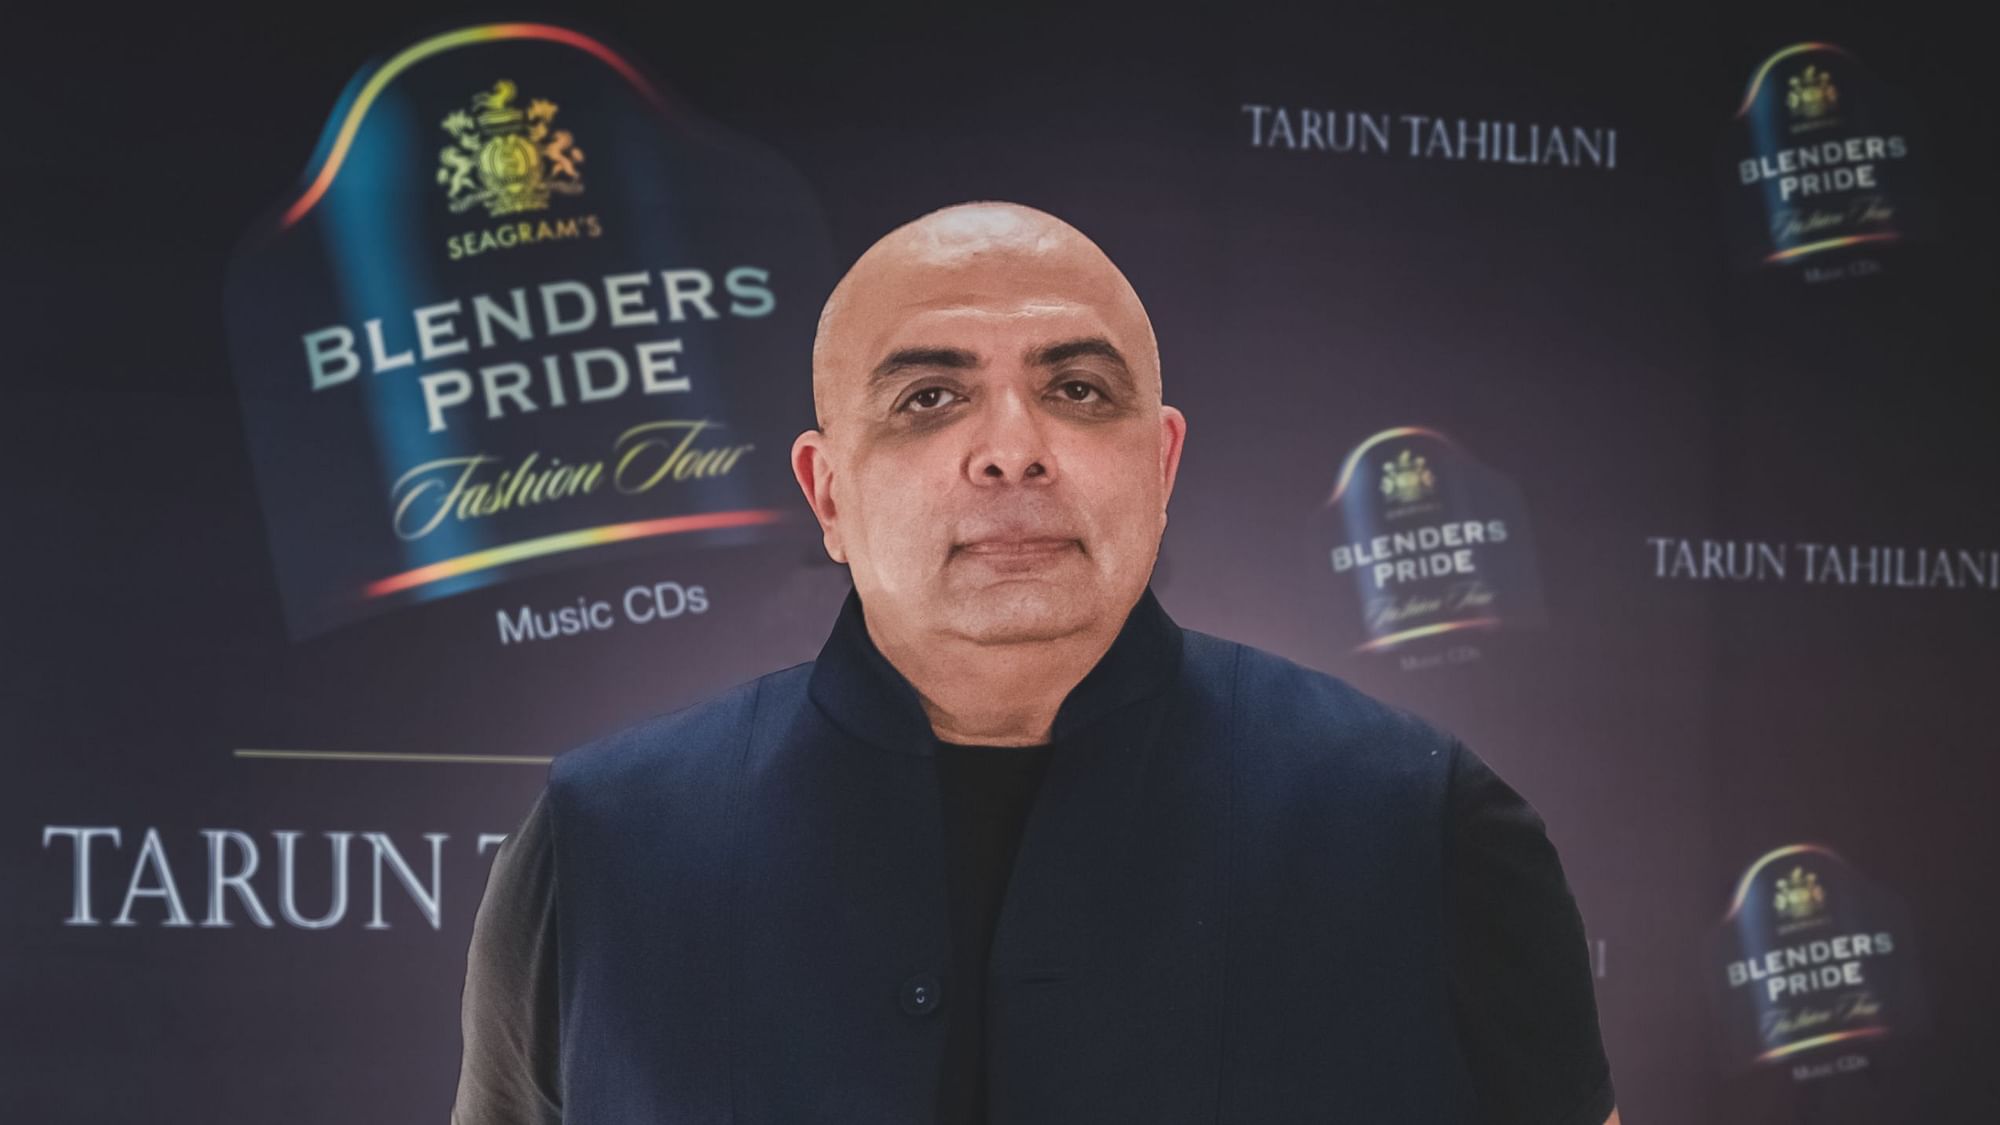 Tarun Tahiliani has completed 25 years in the fashion industry.